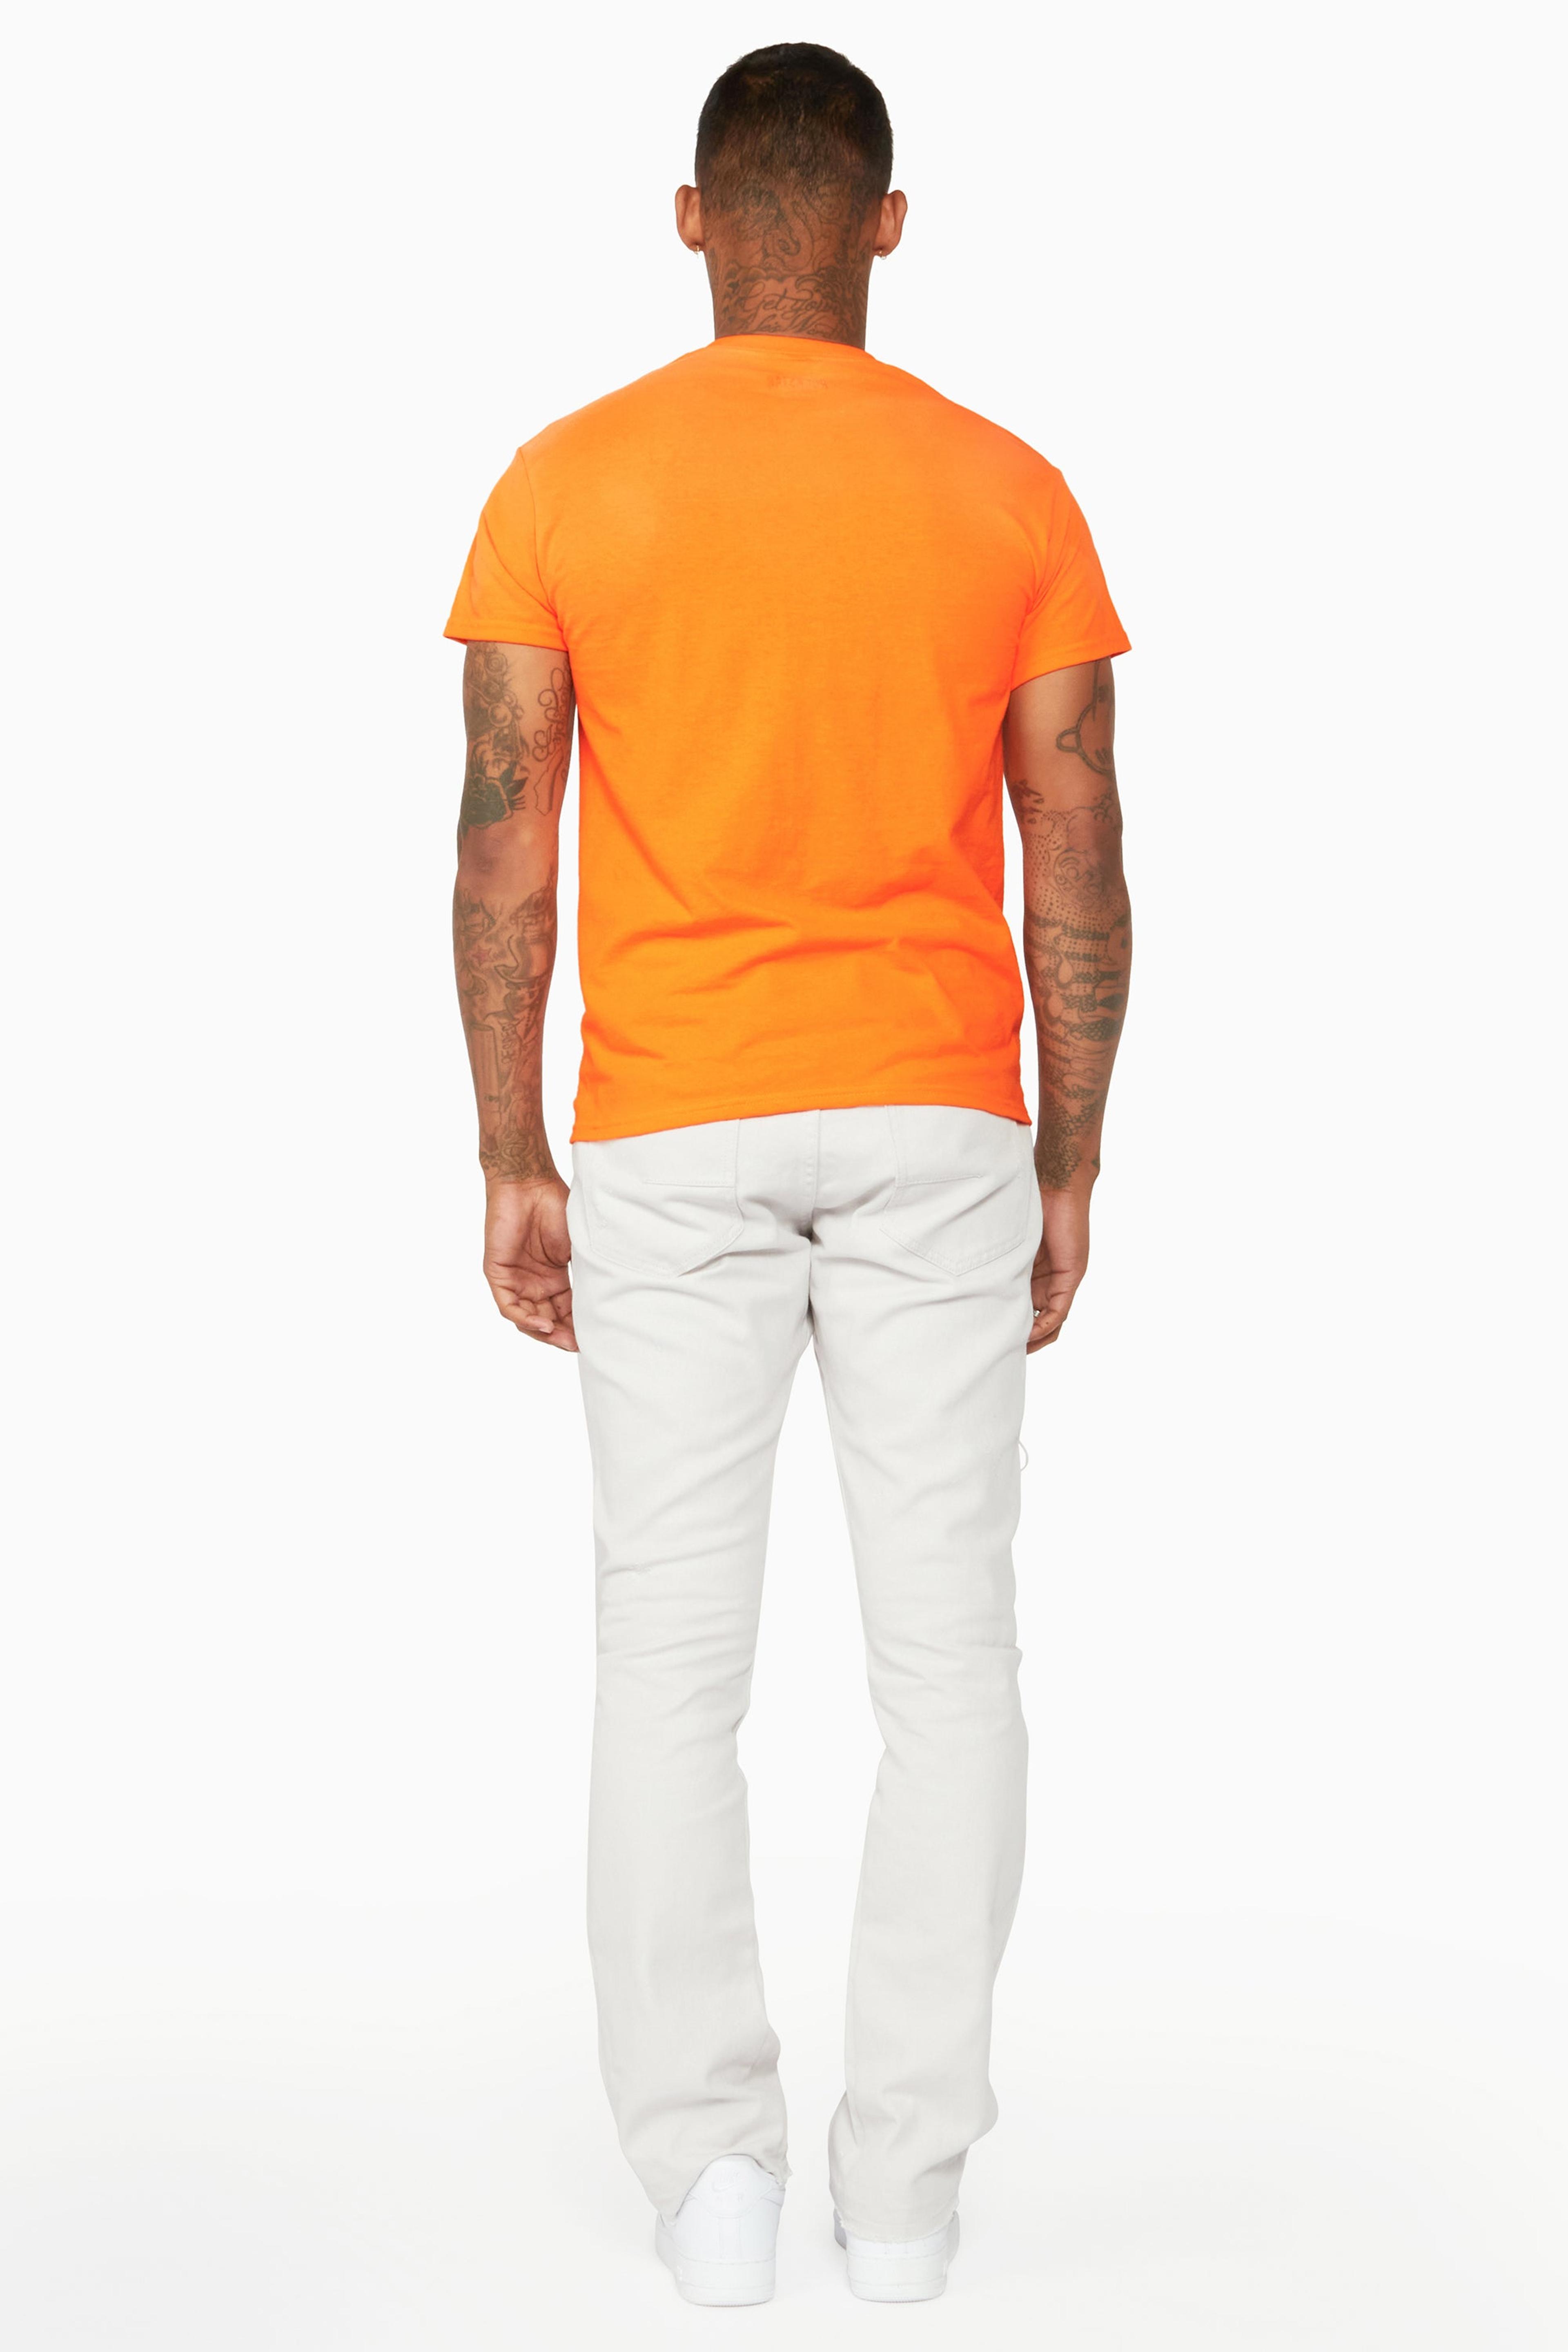 Alternate View 4 of Palmer Orange Graphic T-Shirt